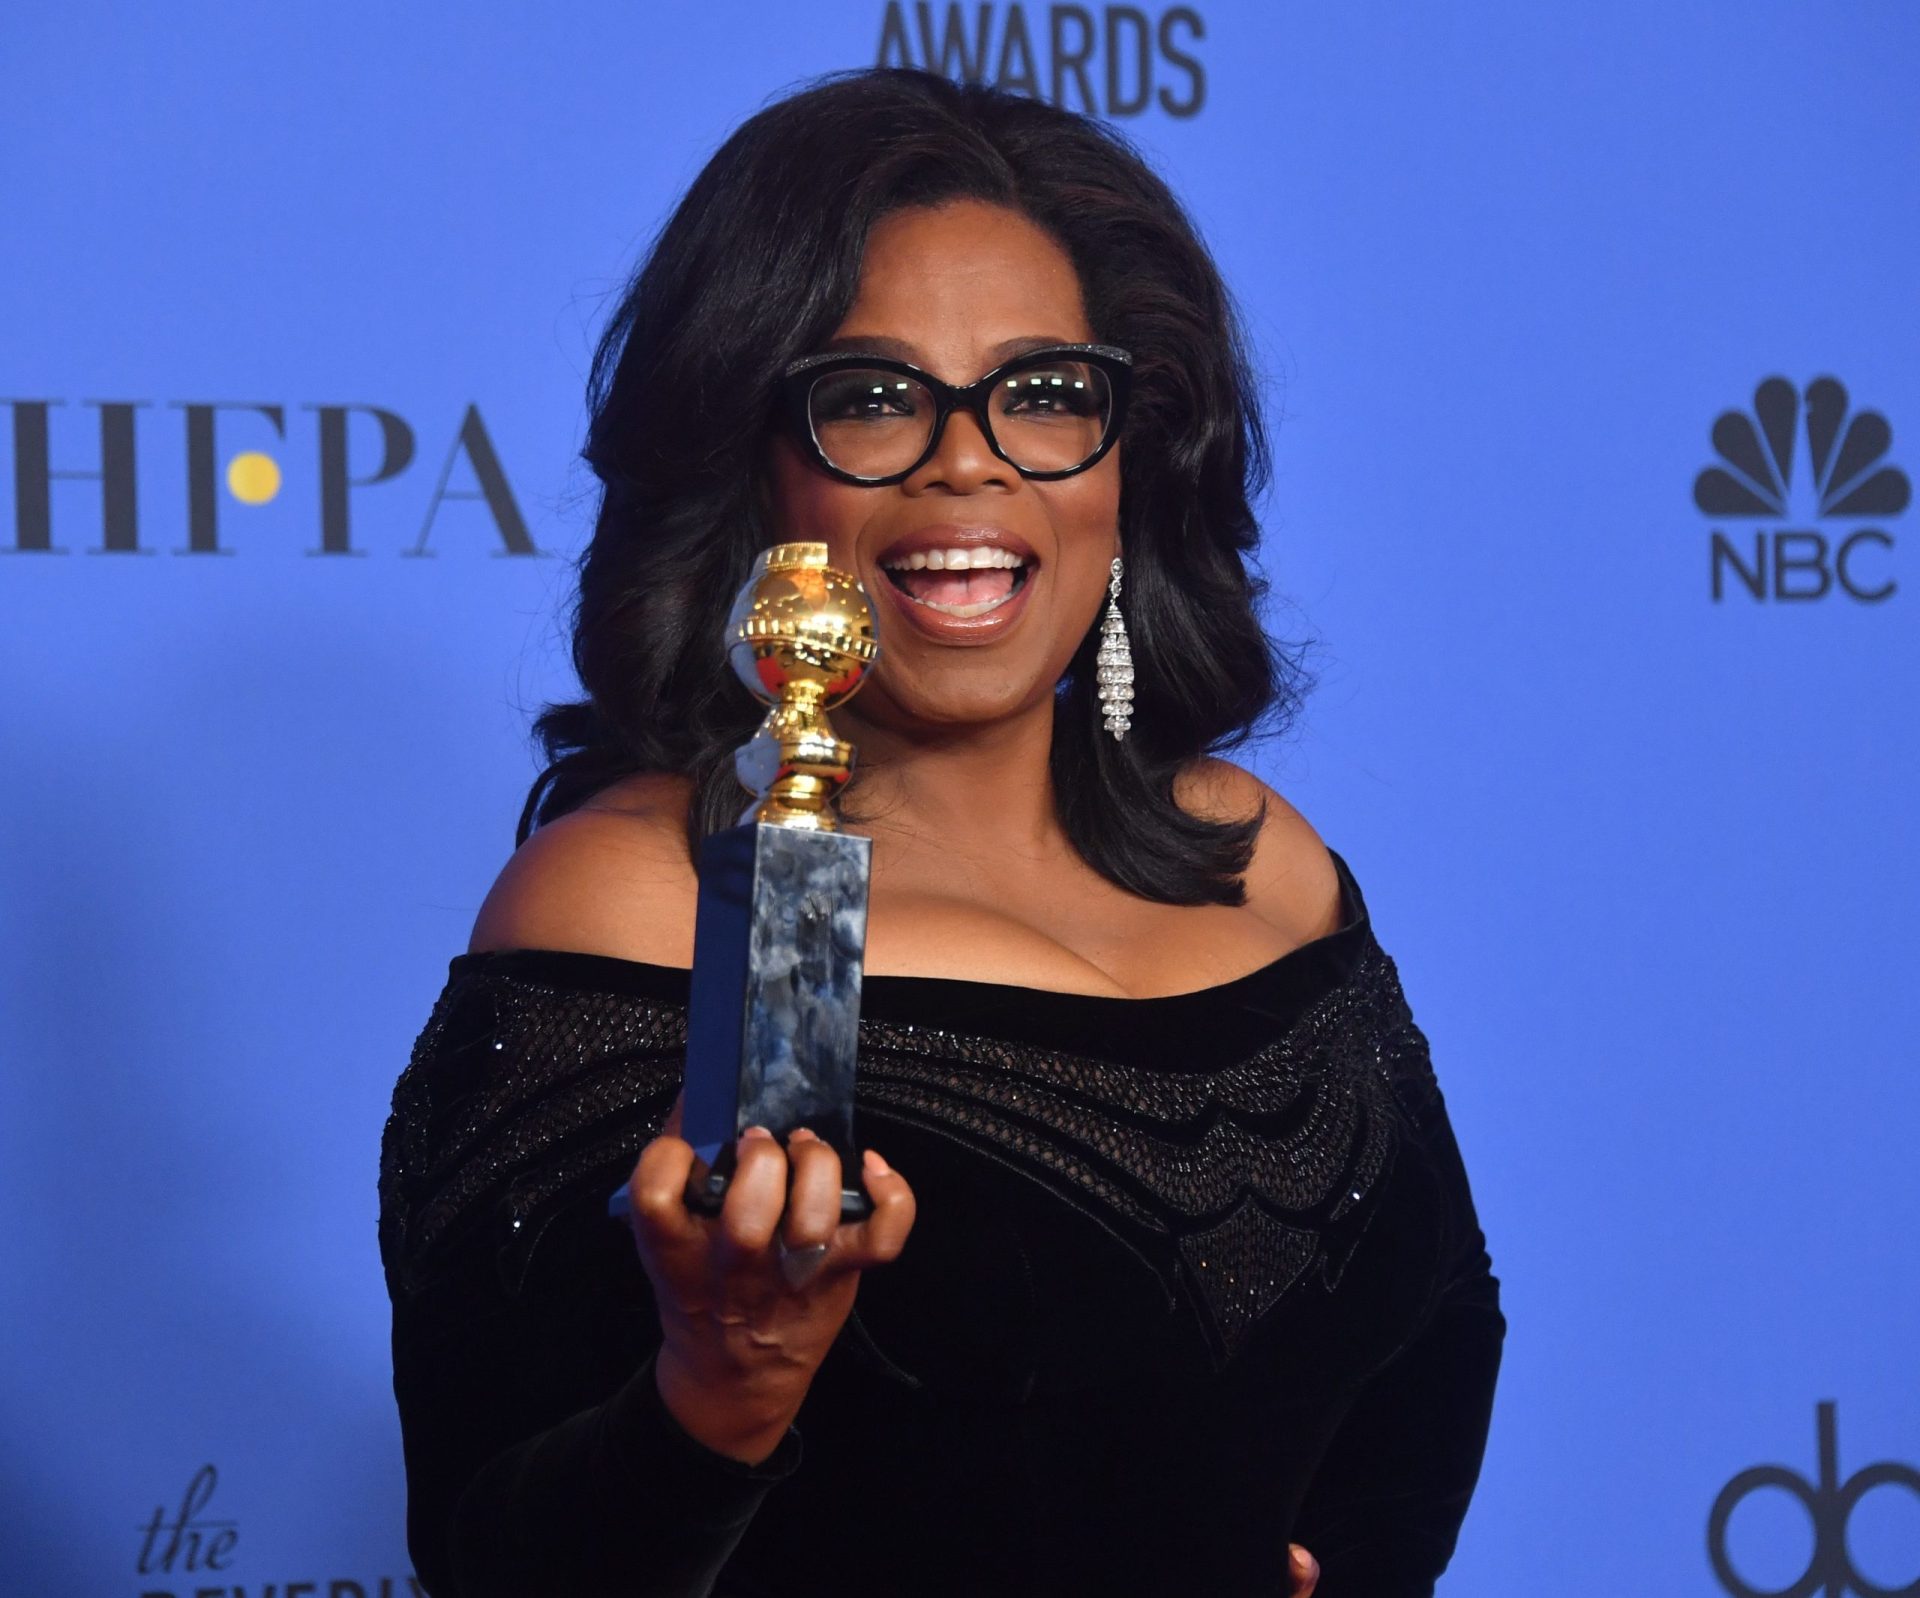 Globos de Ouro. Oprah Winfrey fala sobre assédio e racismo |VÍDEO